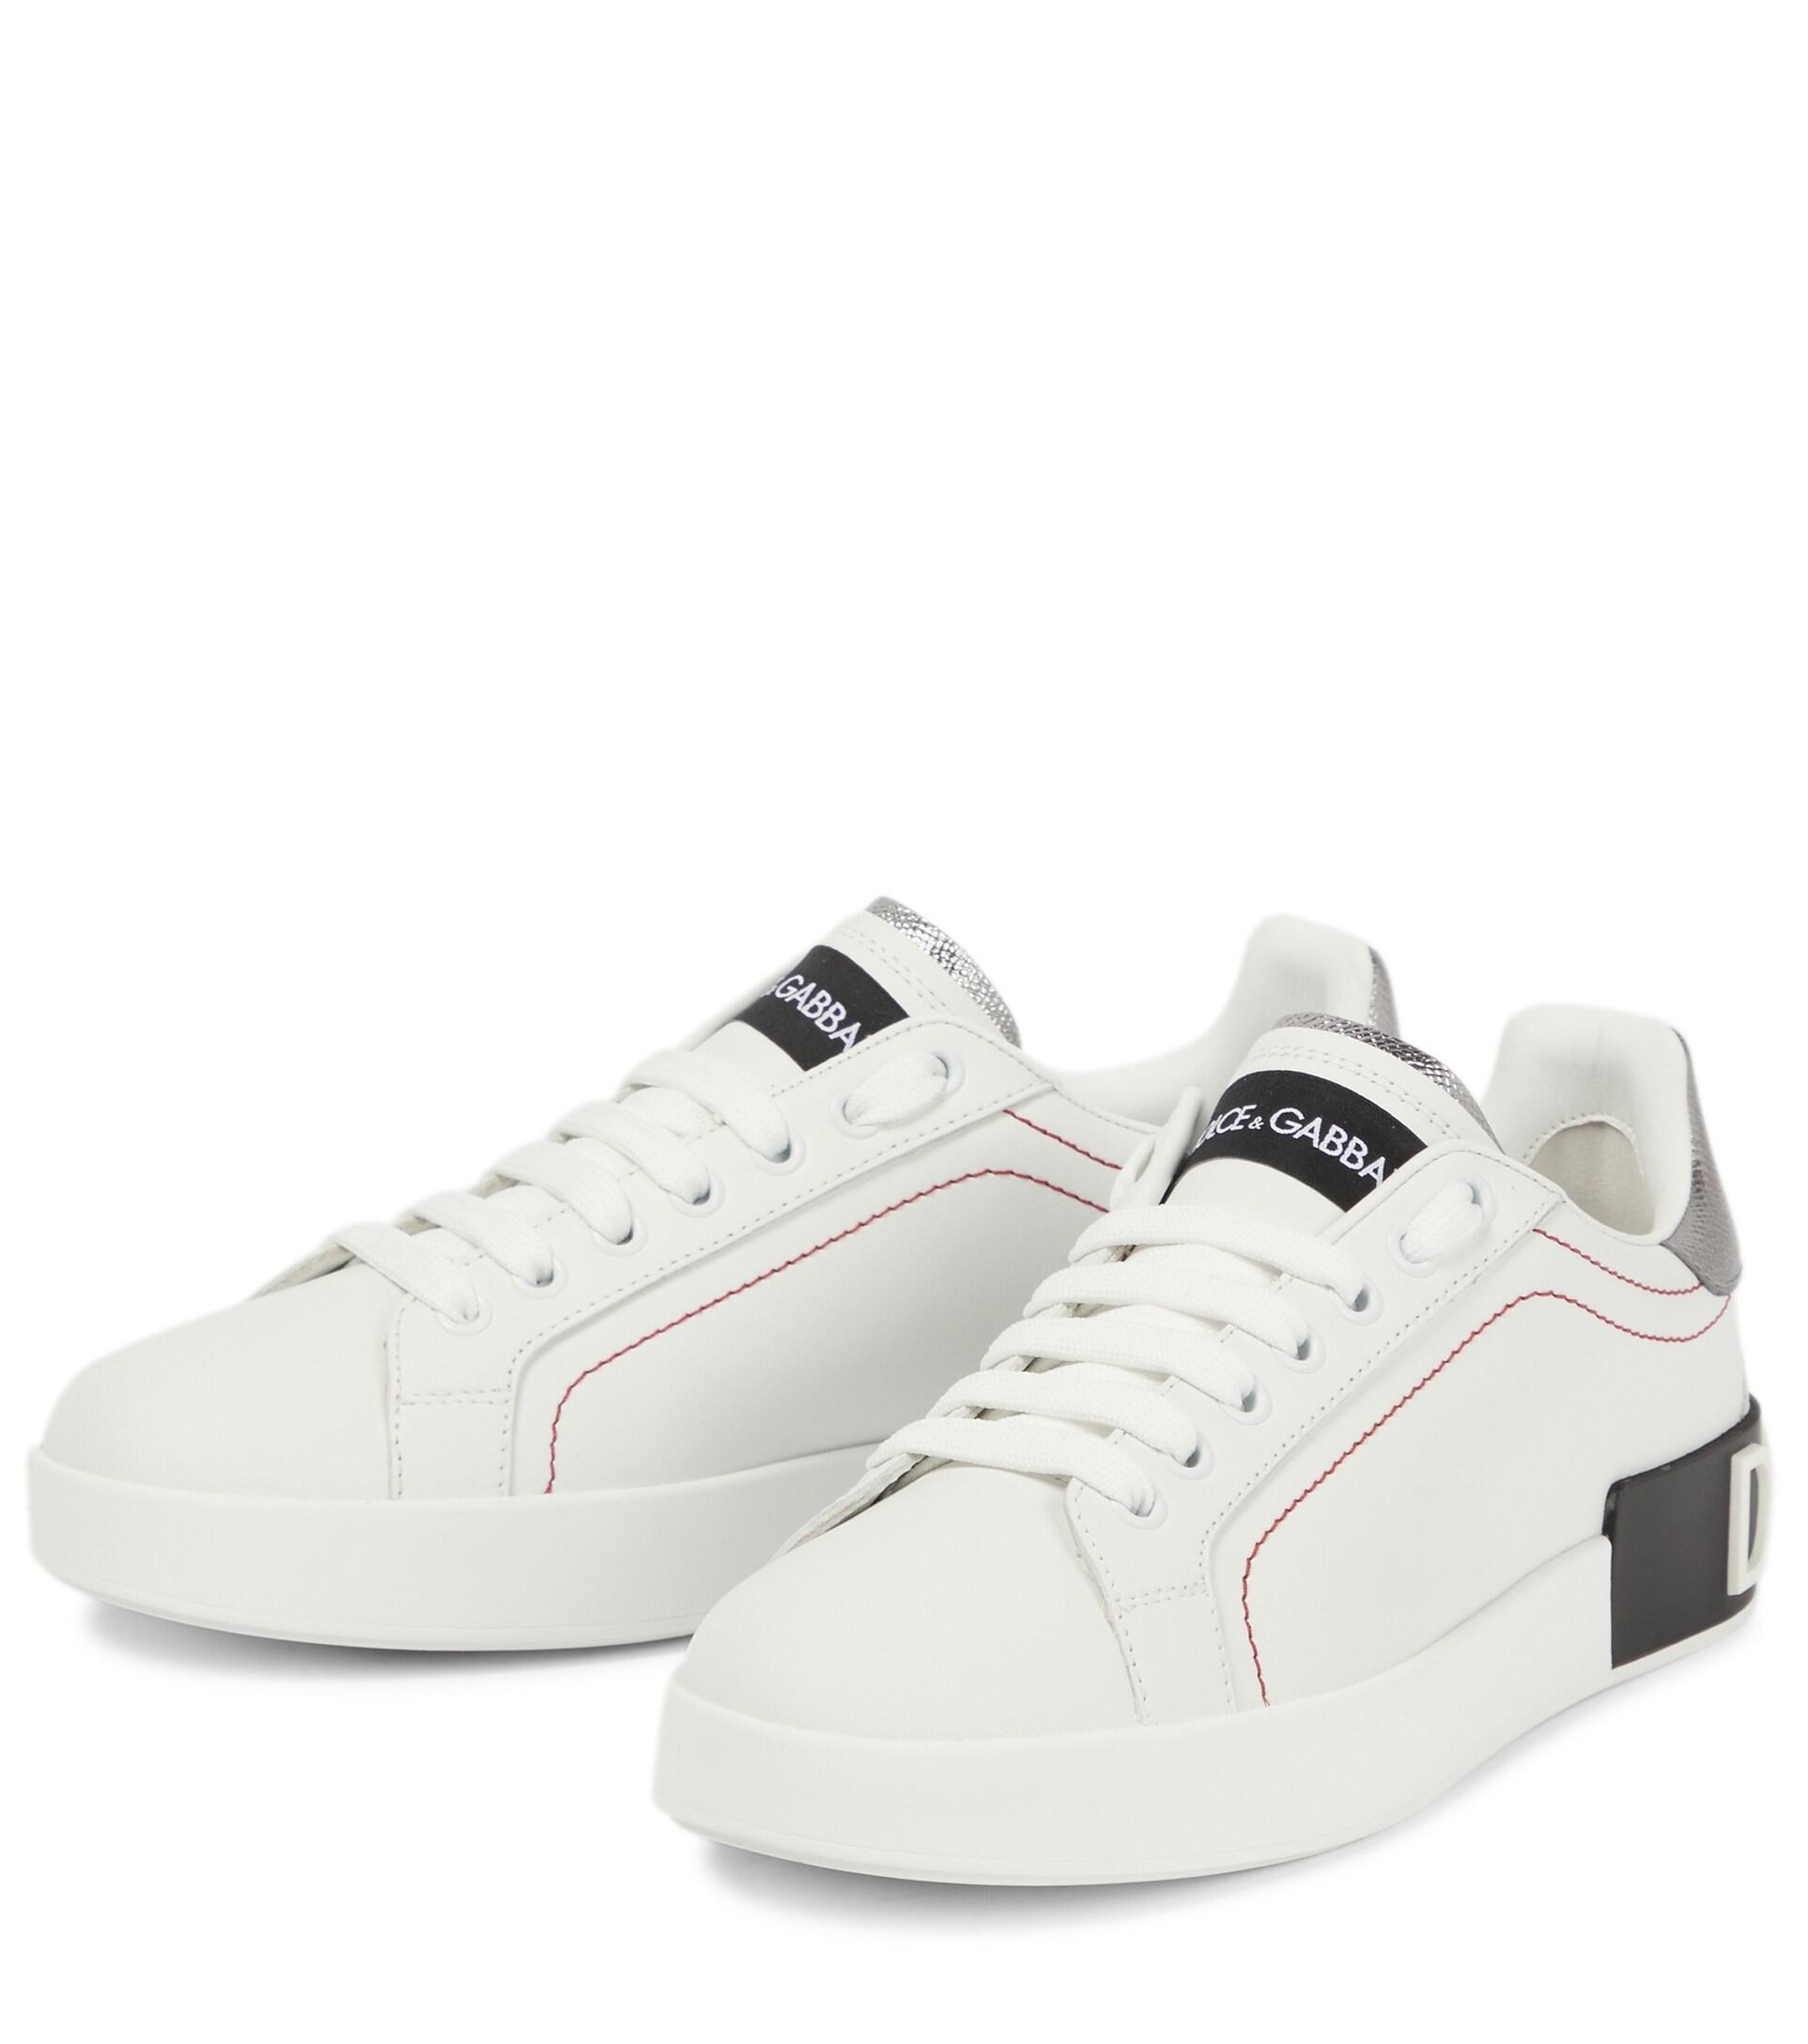 Dolce & Gabbana Portofino Leather Sneakers | Lyst